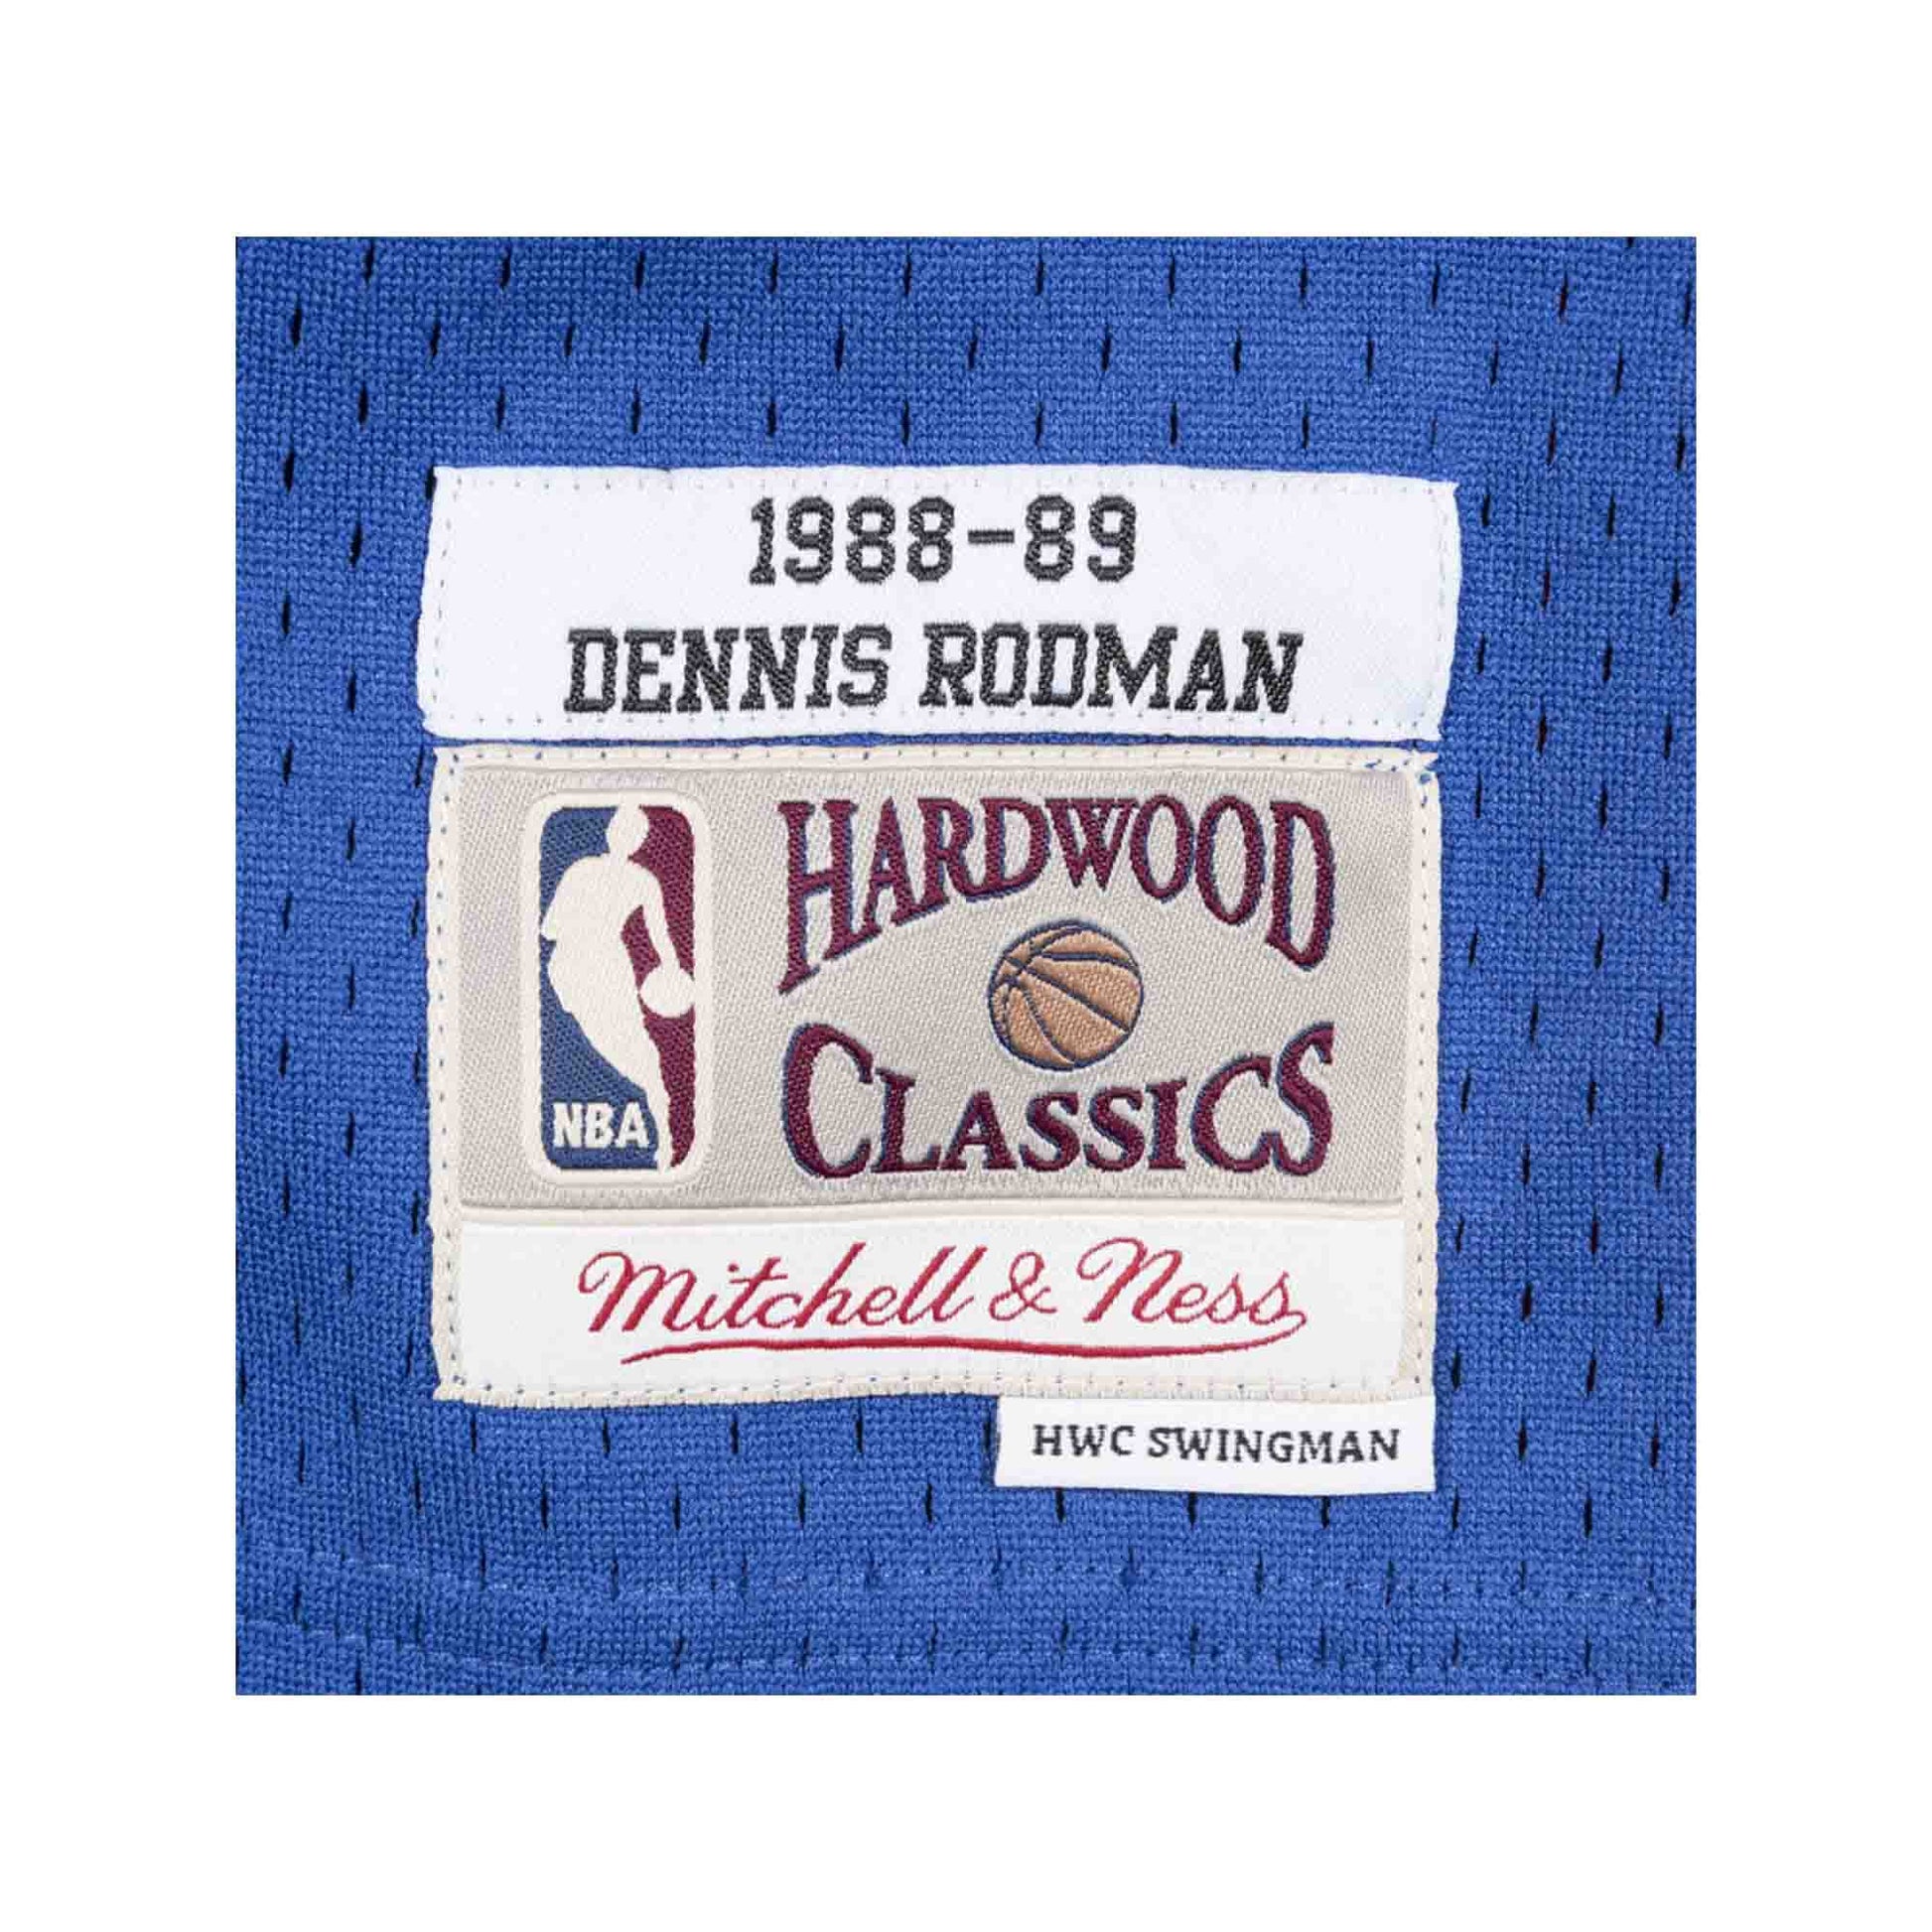 NBA SWINGMAN ROAD JERSEY PISTONS 88 DENNIS RODMAN 'ROYAL